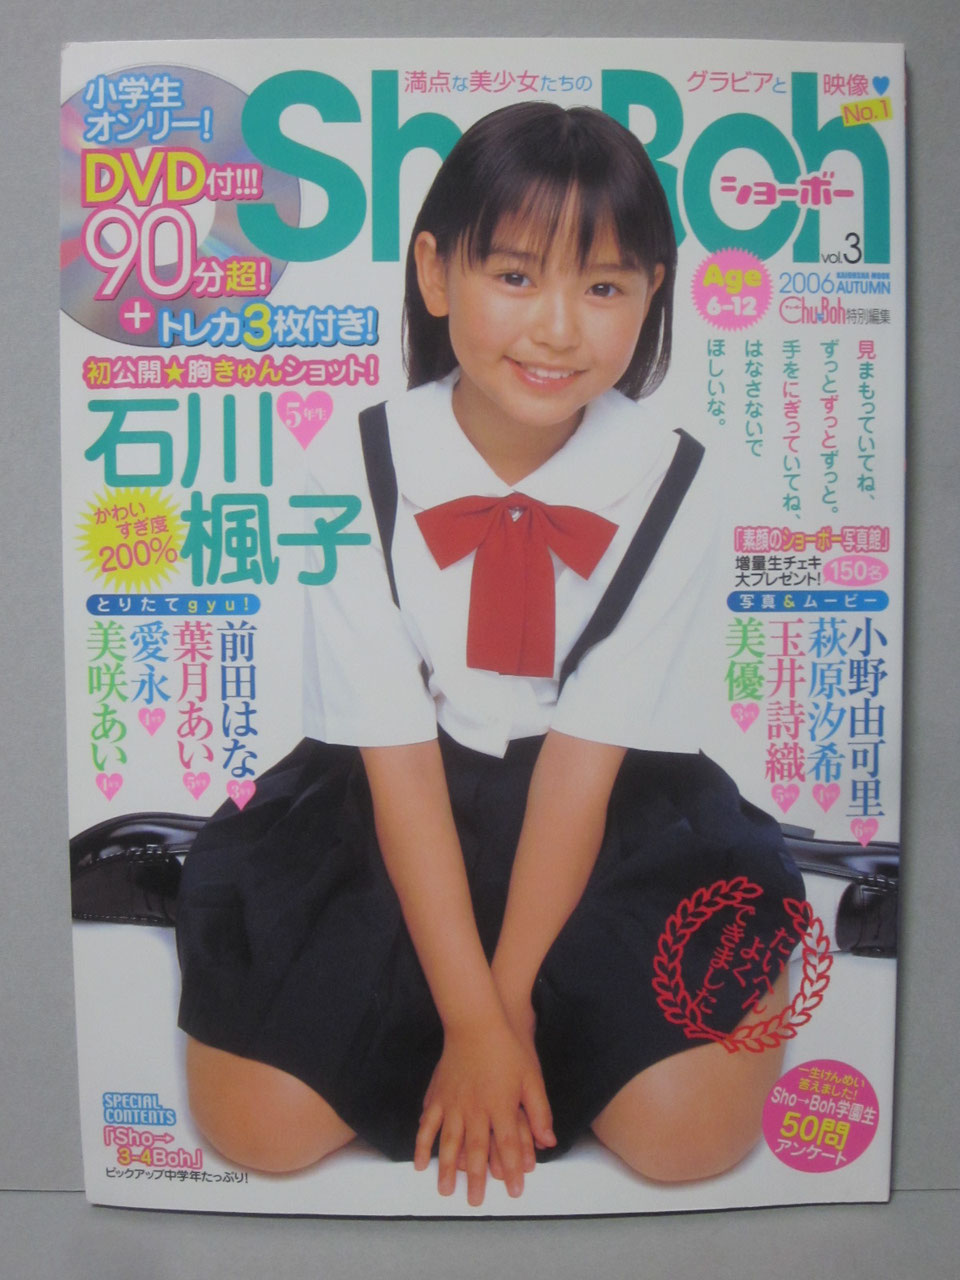 Sho→boh ショーボー vol.13(2008 summer) DVD確認済-